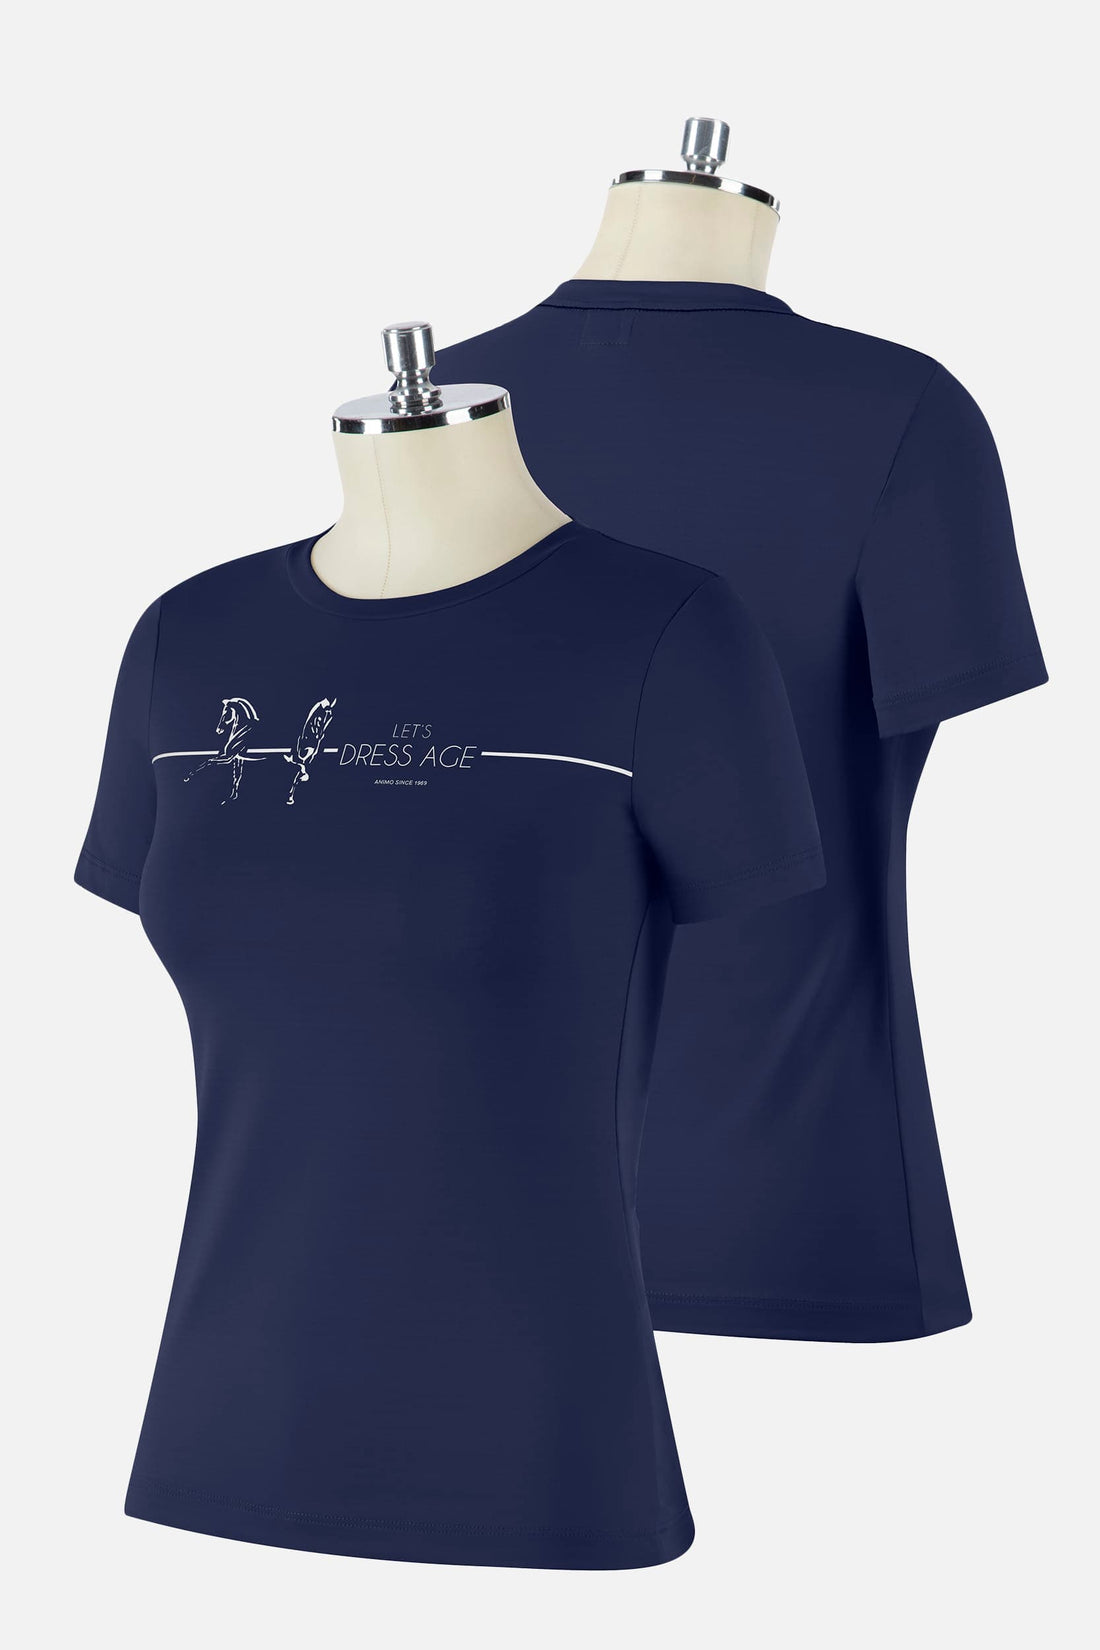 Animo Faraway T-shirt, Navy